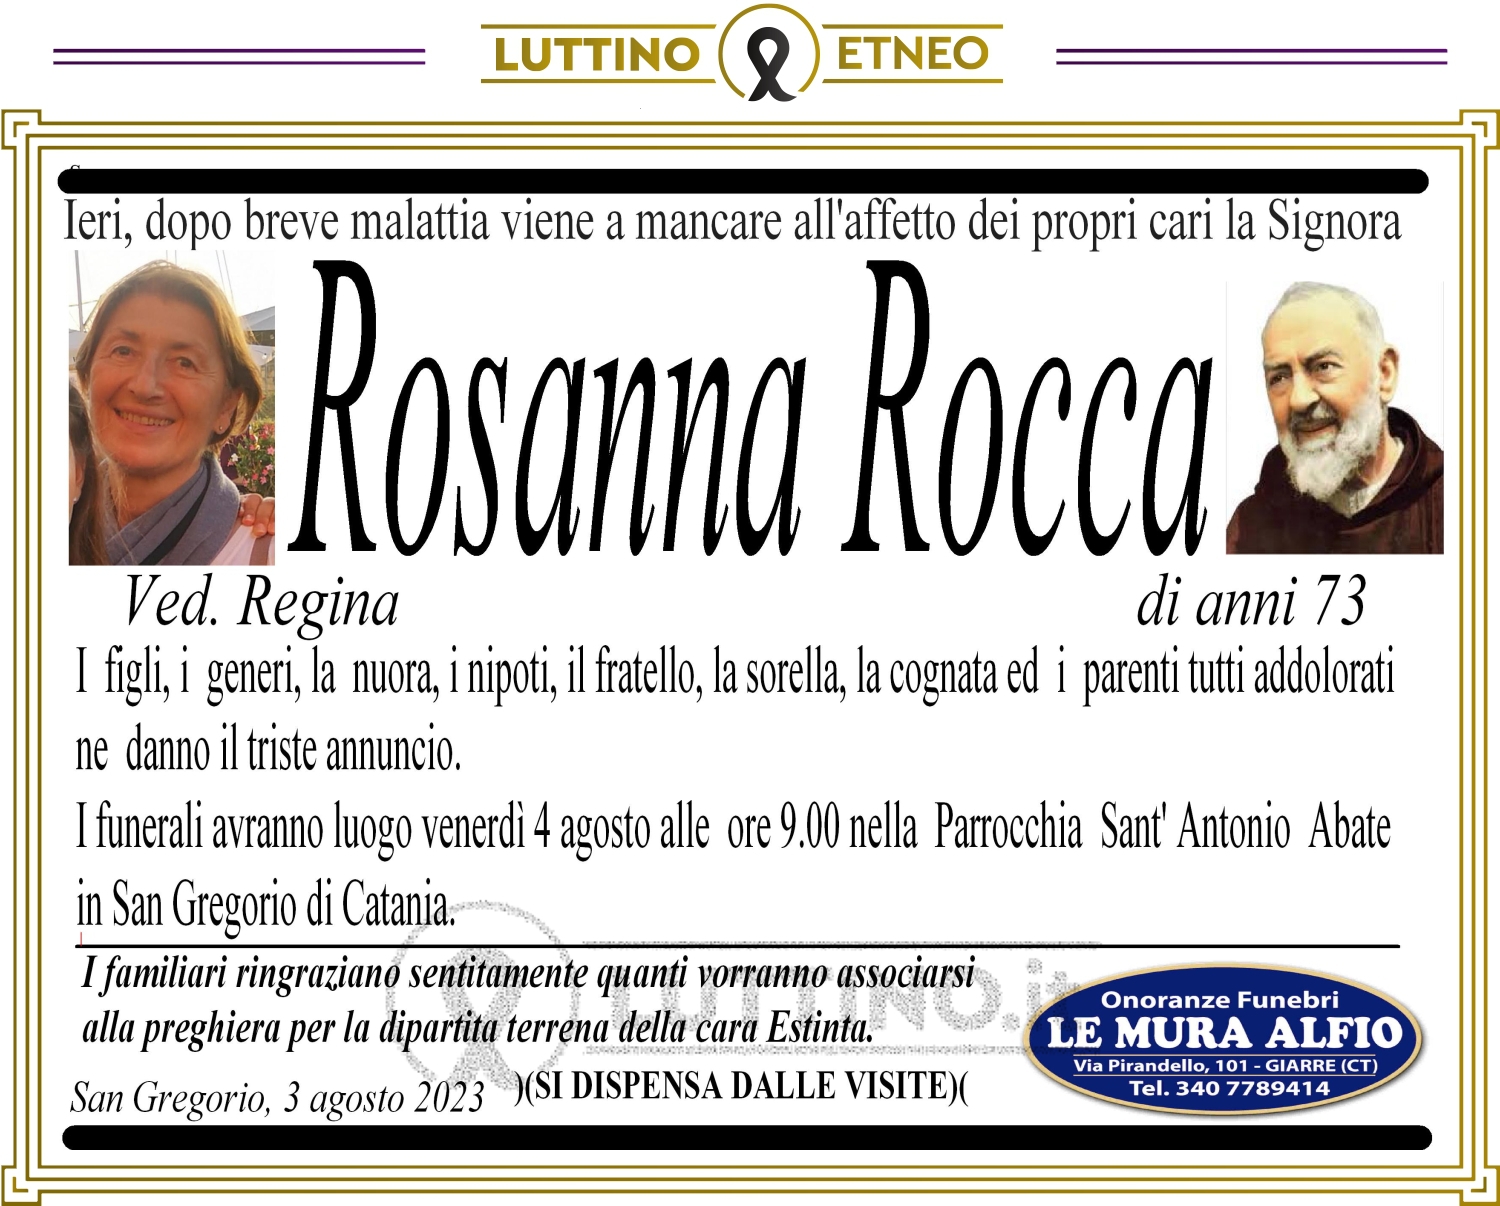 Rosanna Rocca